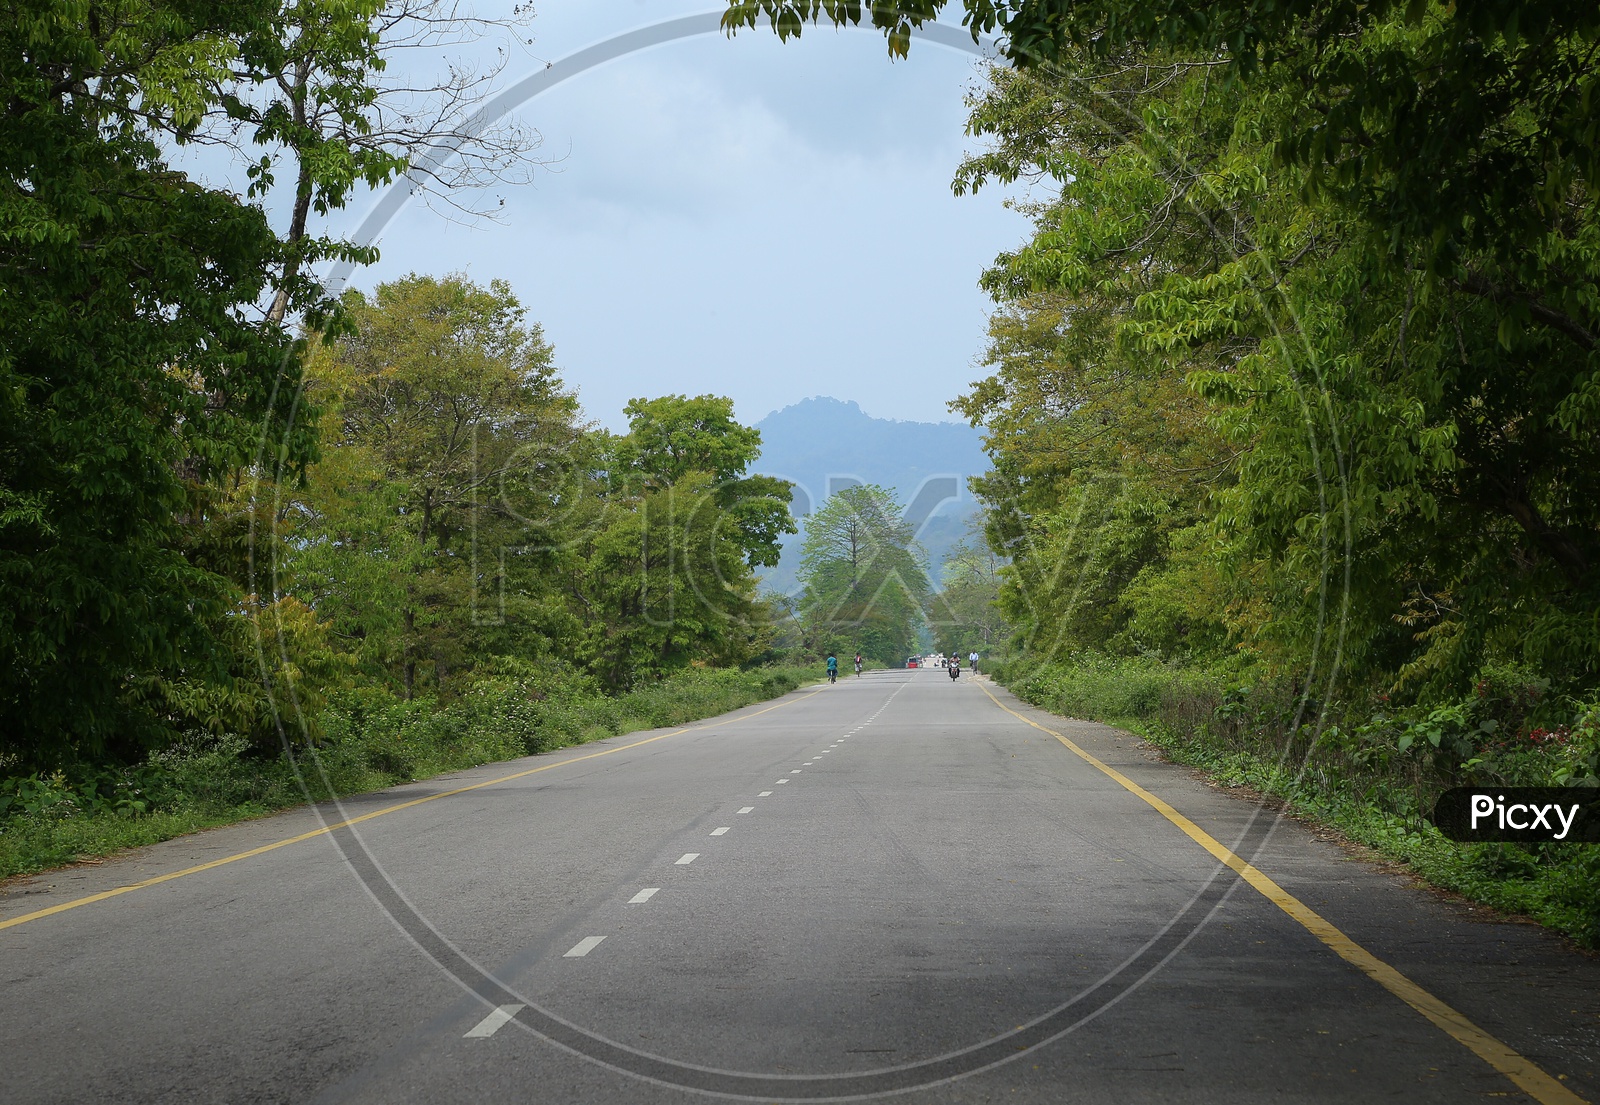 Scenic roads of northeast India m